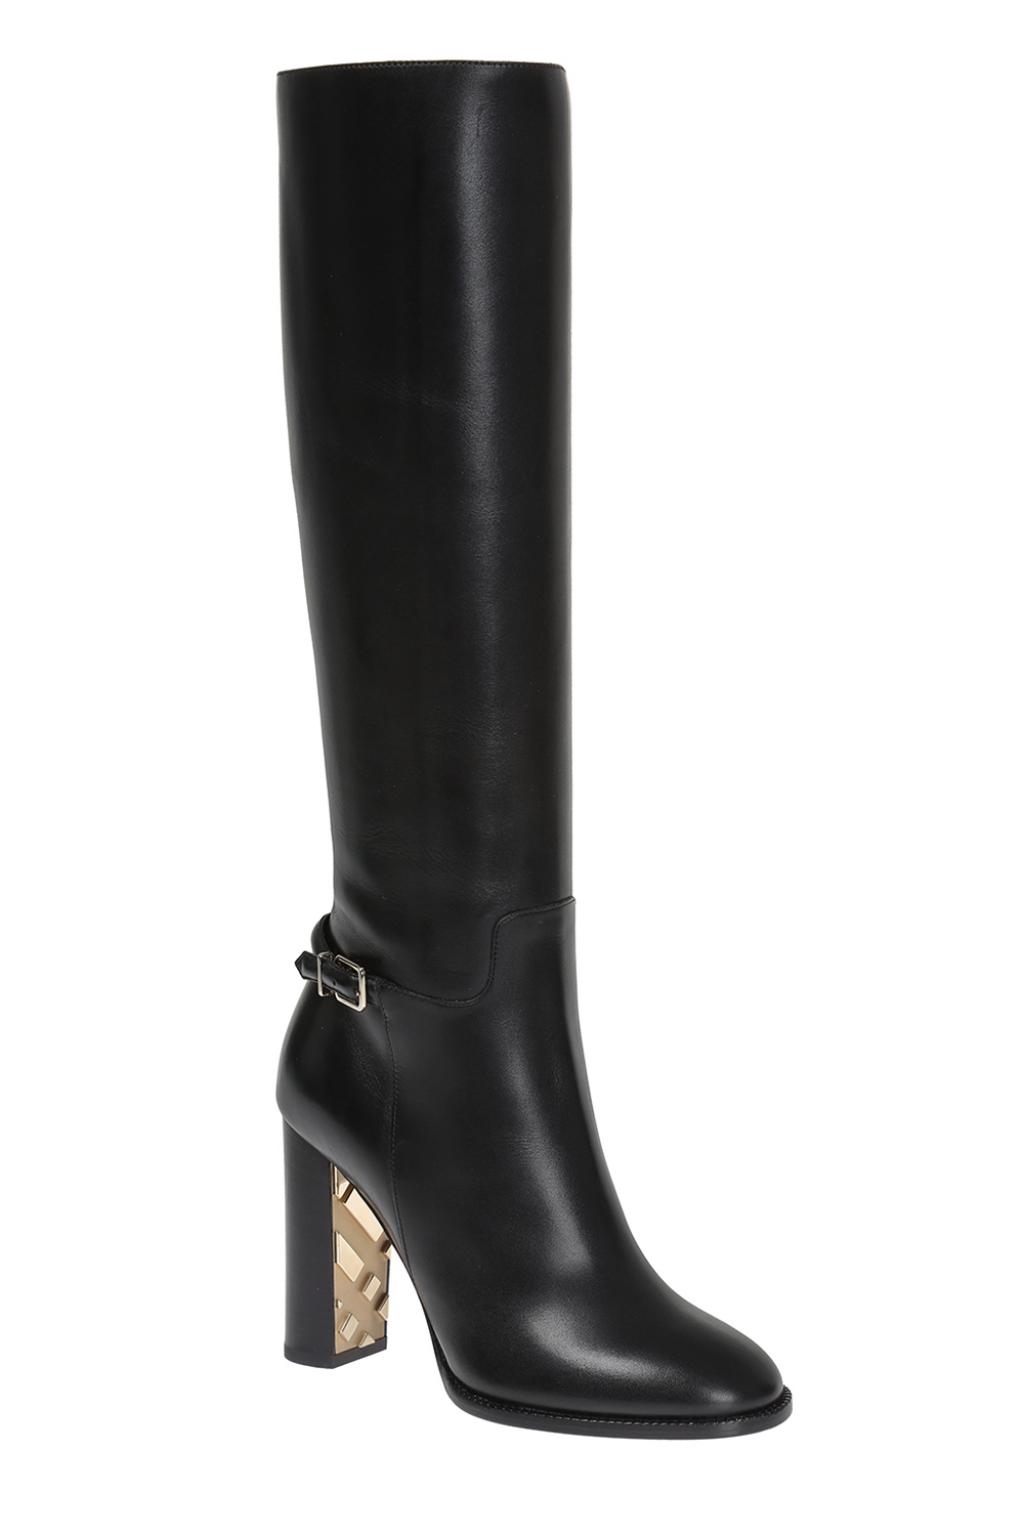 Black 'Marston' leather knee-high boots Burberry - Vitkac TW